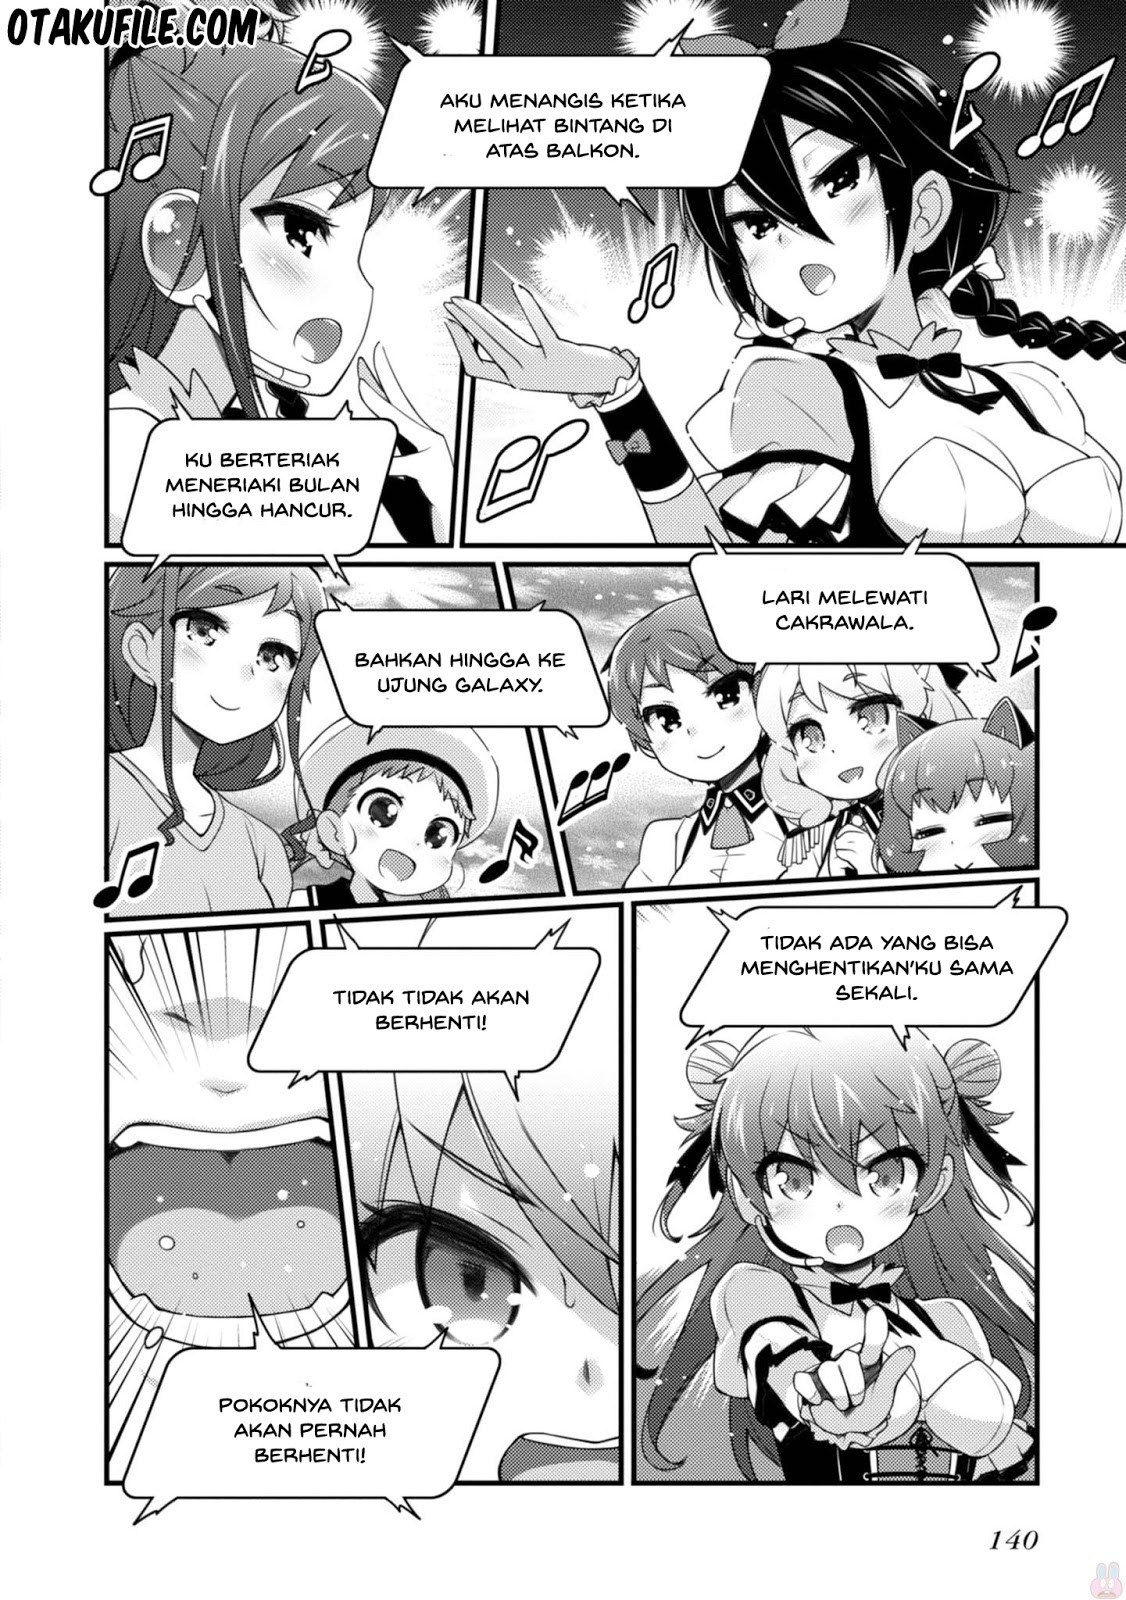 Sakura Nadeshiko Chapter 21 - End